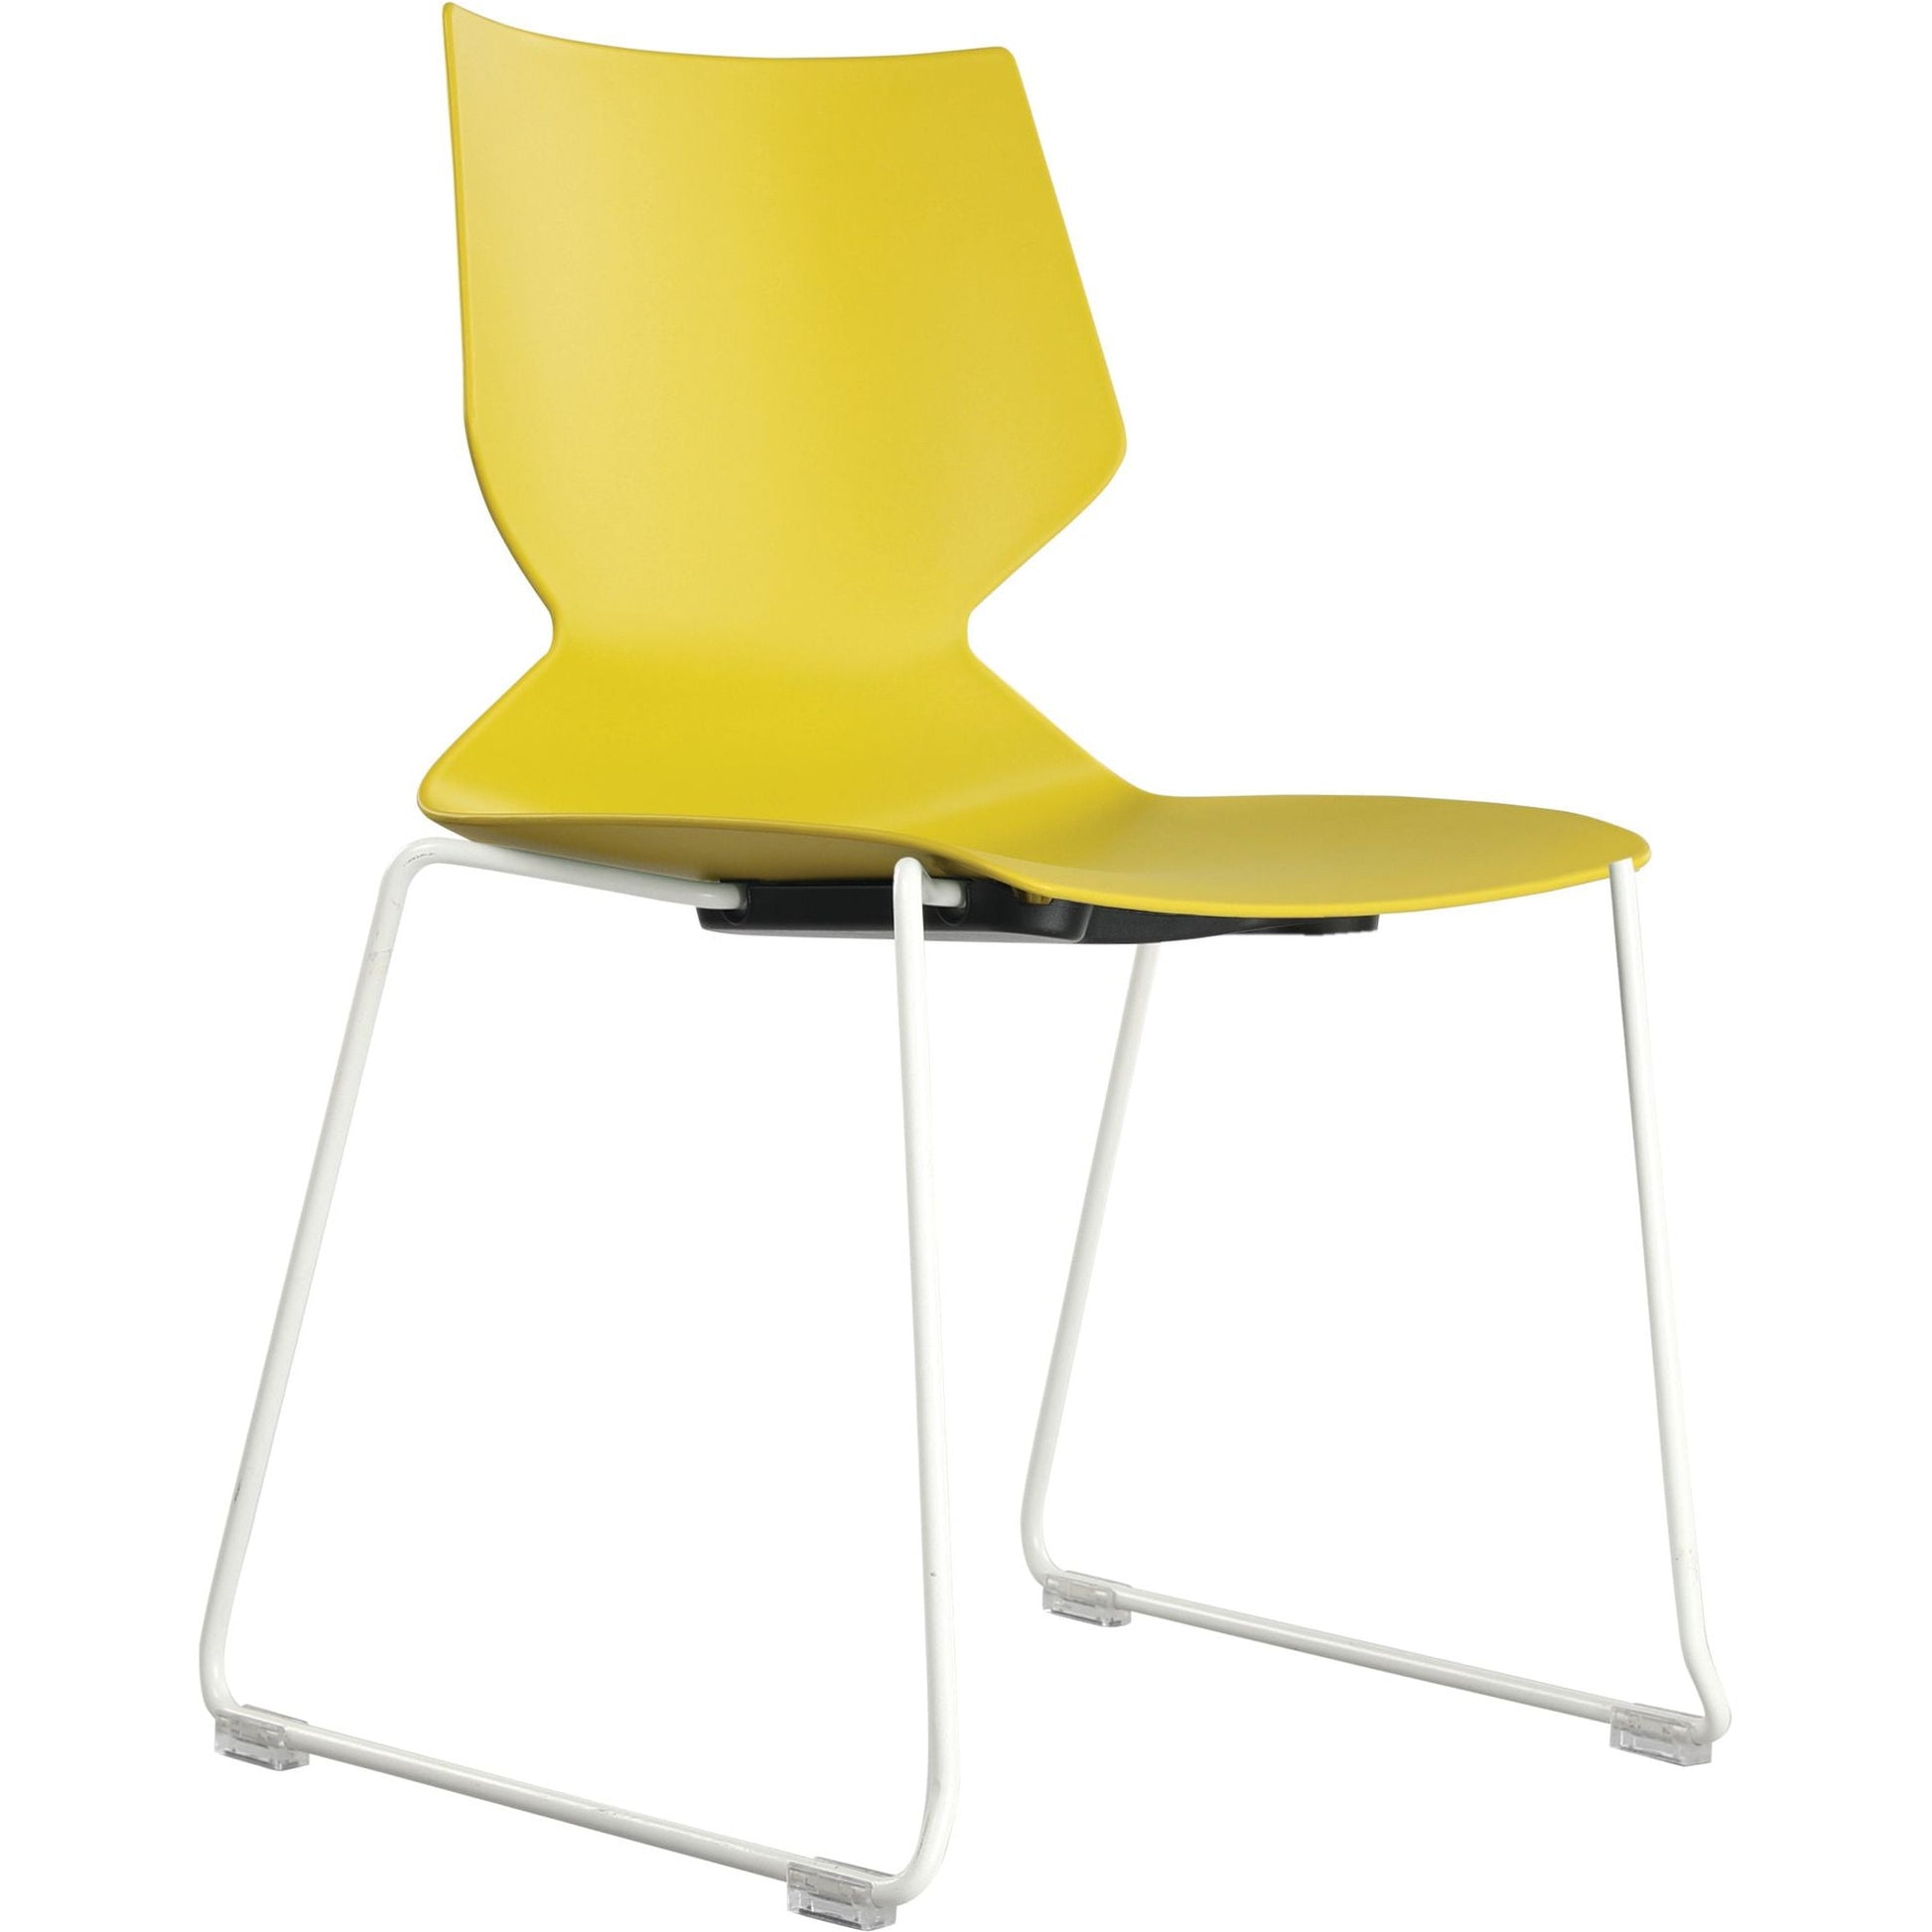 Konfurb Fly - Sled Base - White Frame-Stackable seating-Smart Office Furniture